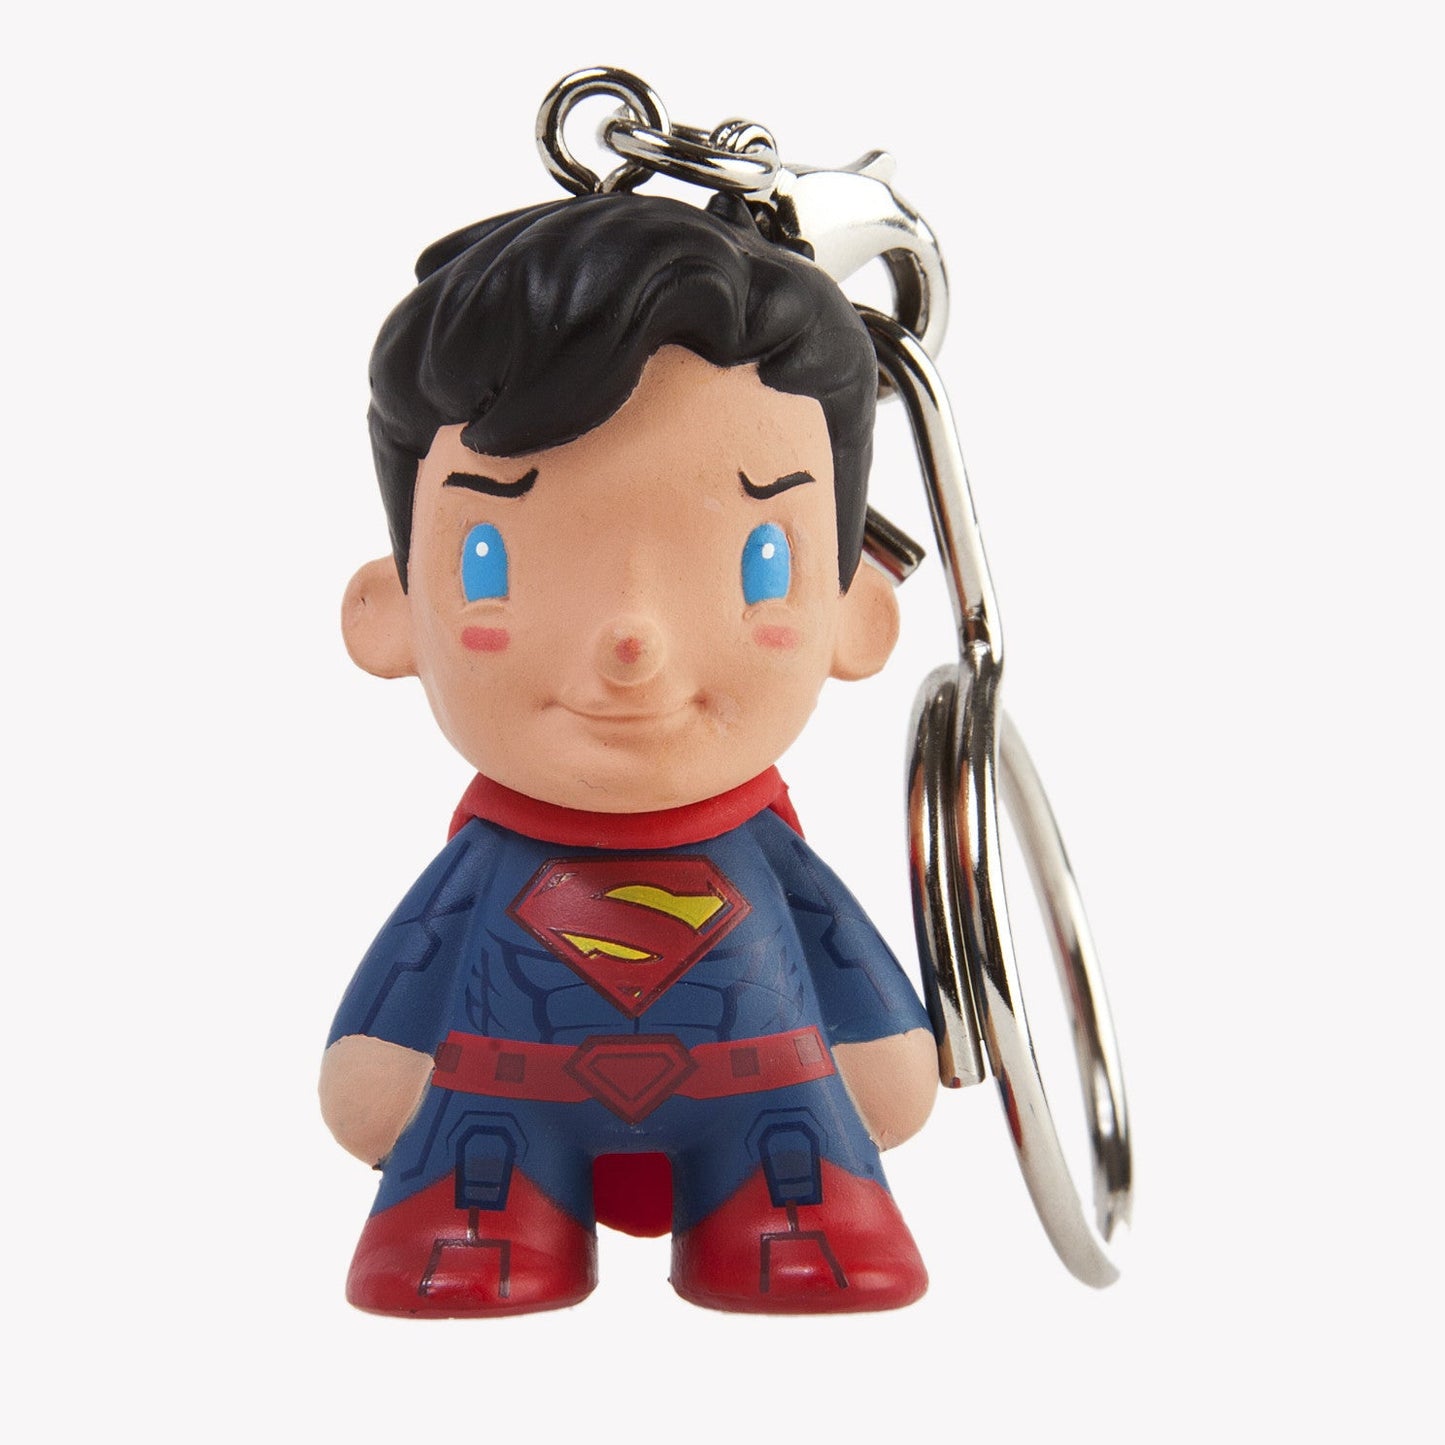 Kidrobot x DC Comics Keychain Series - Superman